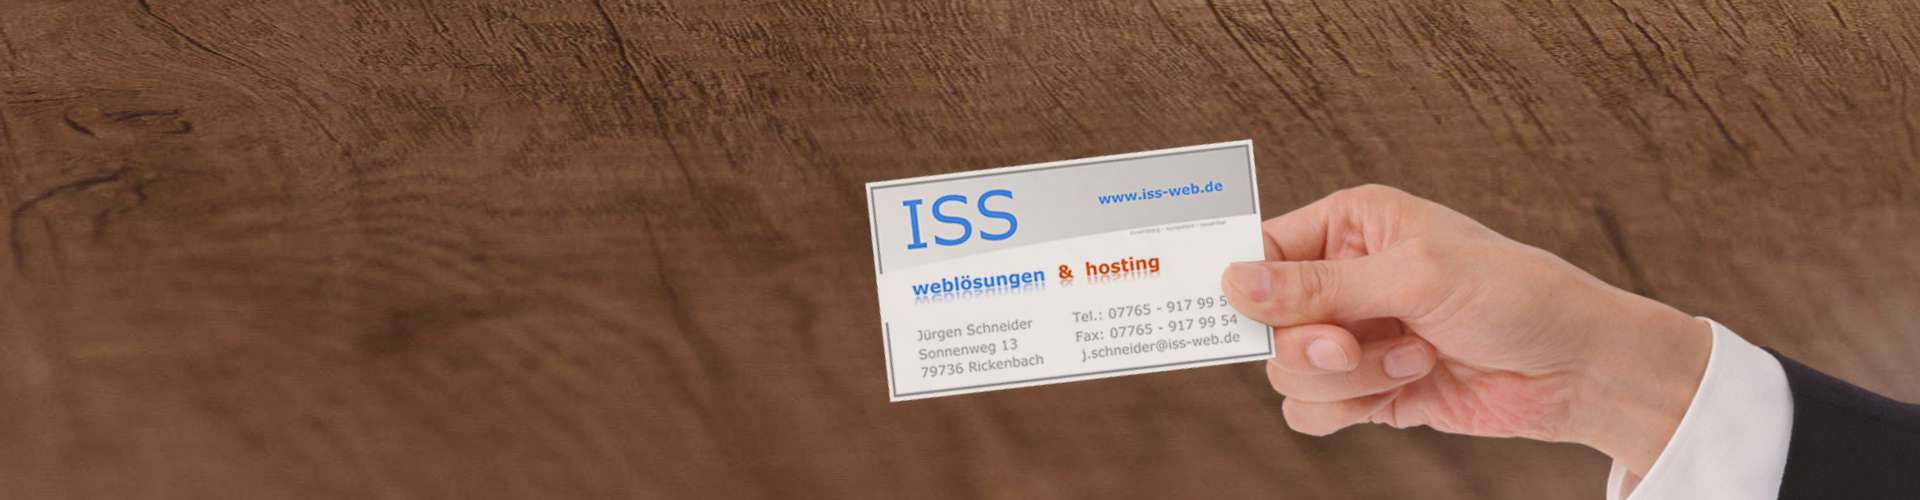 Referenzen | ISS - Internet Services | websites, hosting & digital marketing